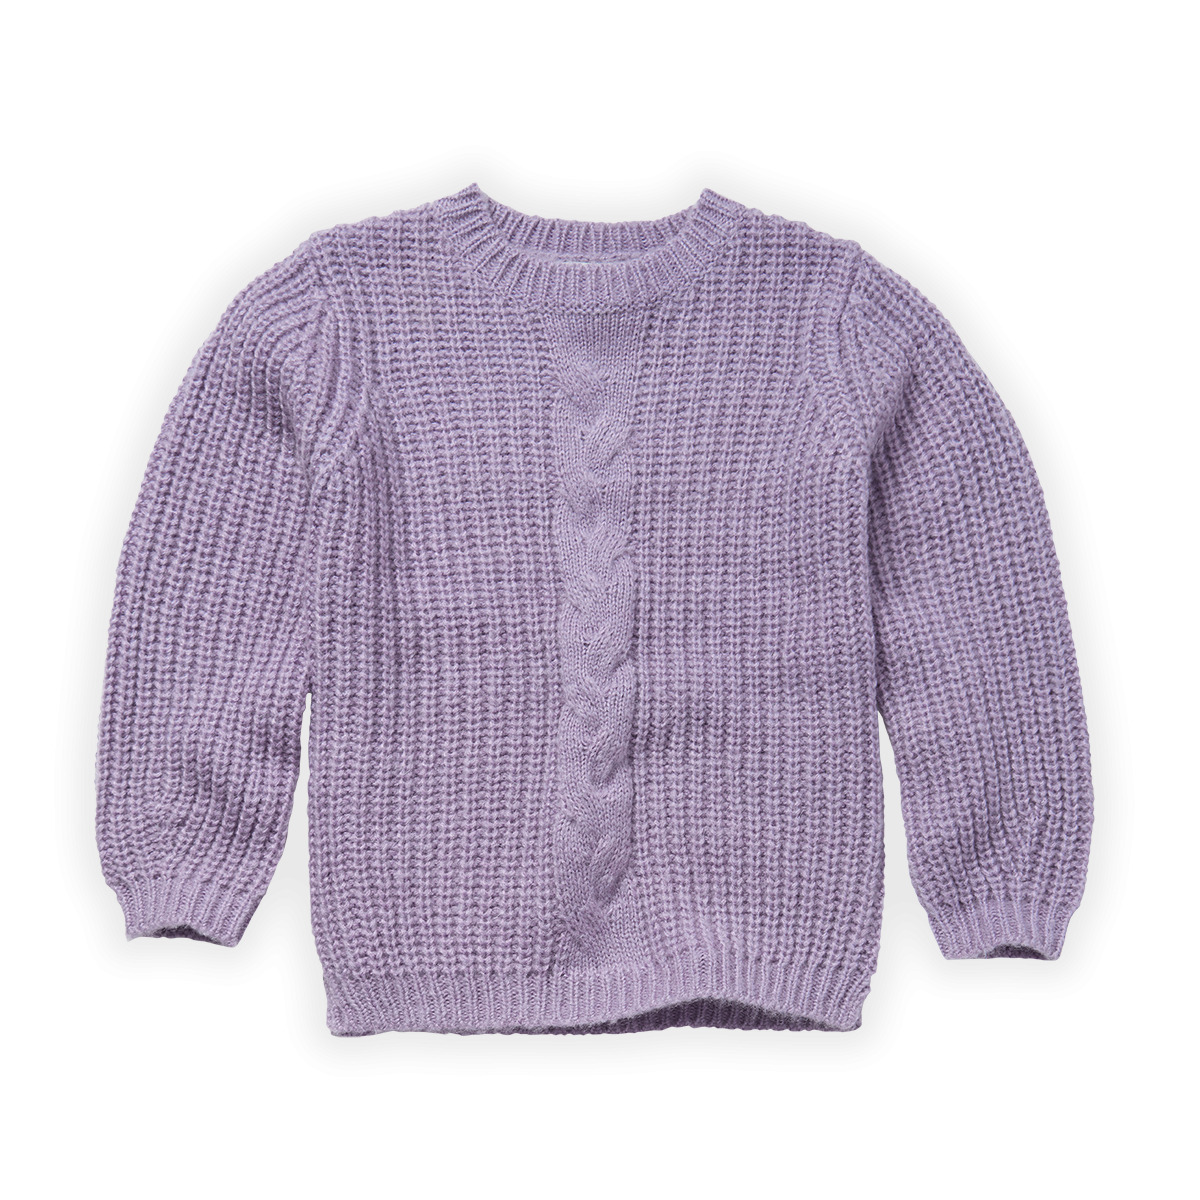 Sproet & Sprout Lavendar Cable Knit Sweater [Final Sale]